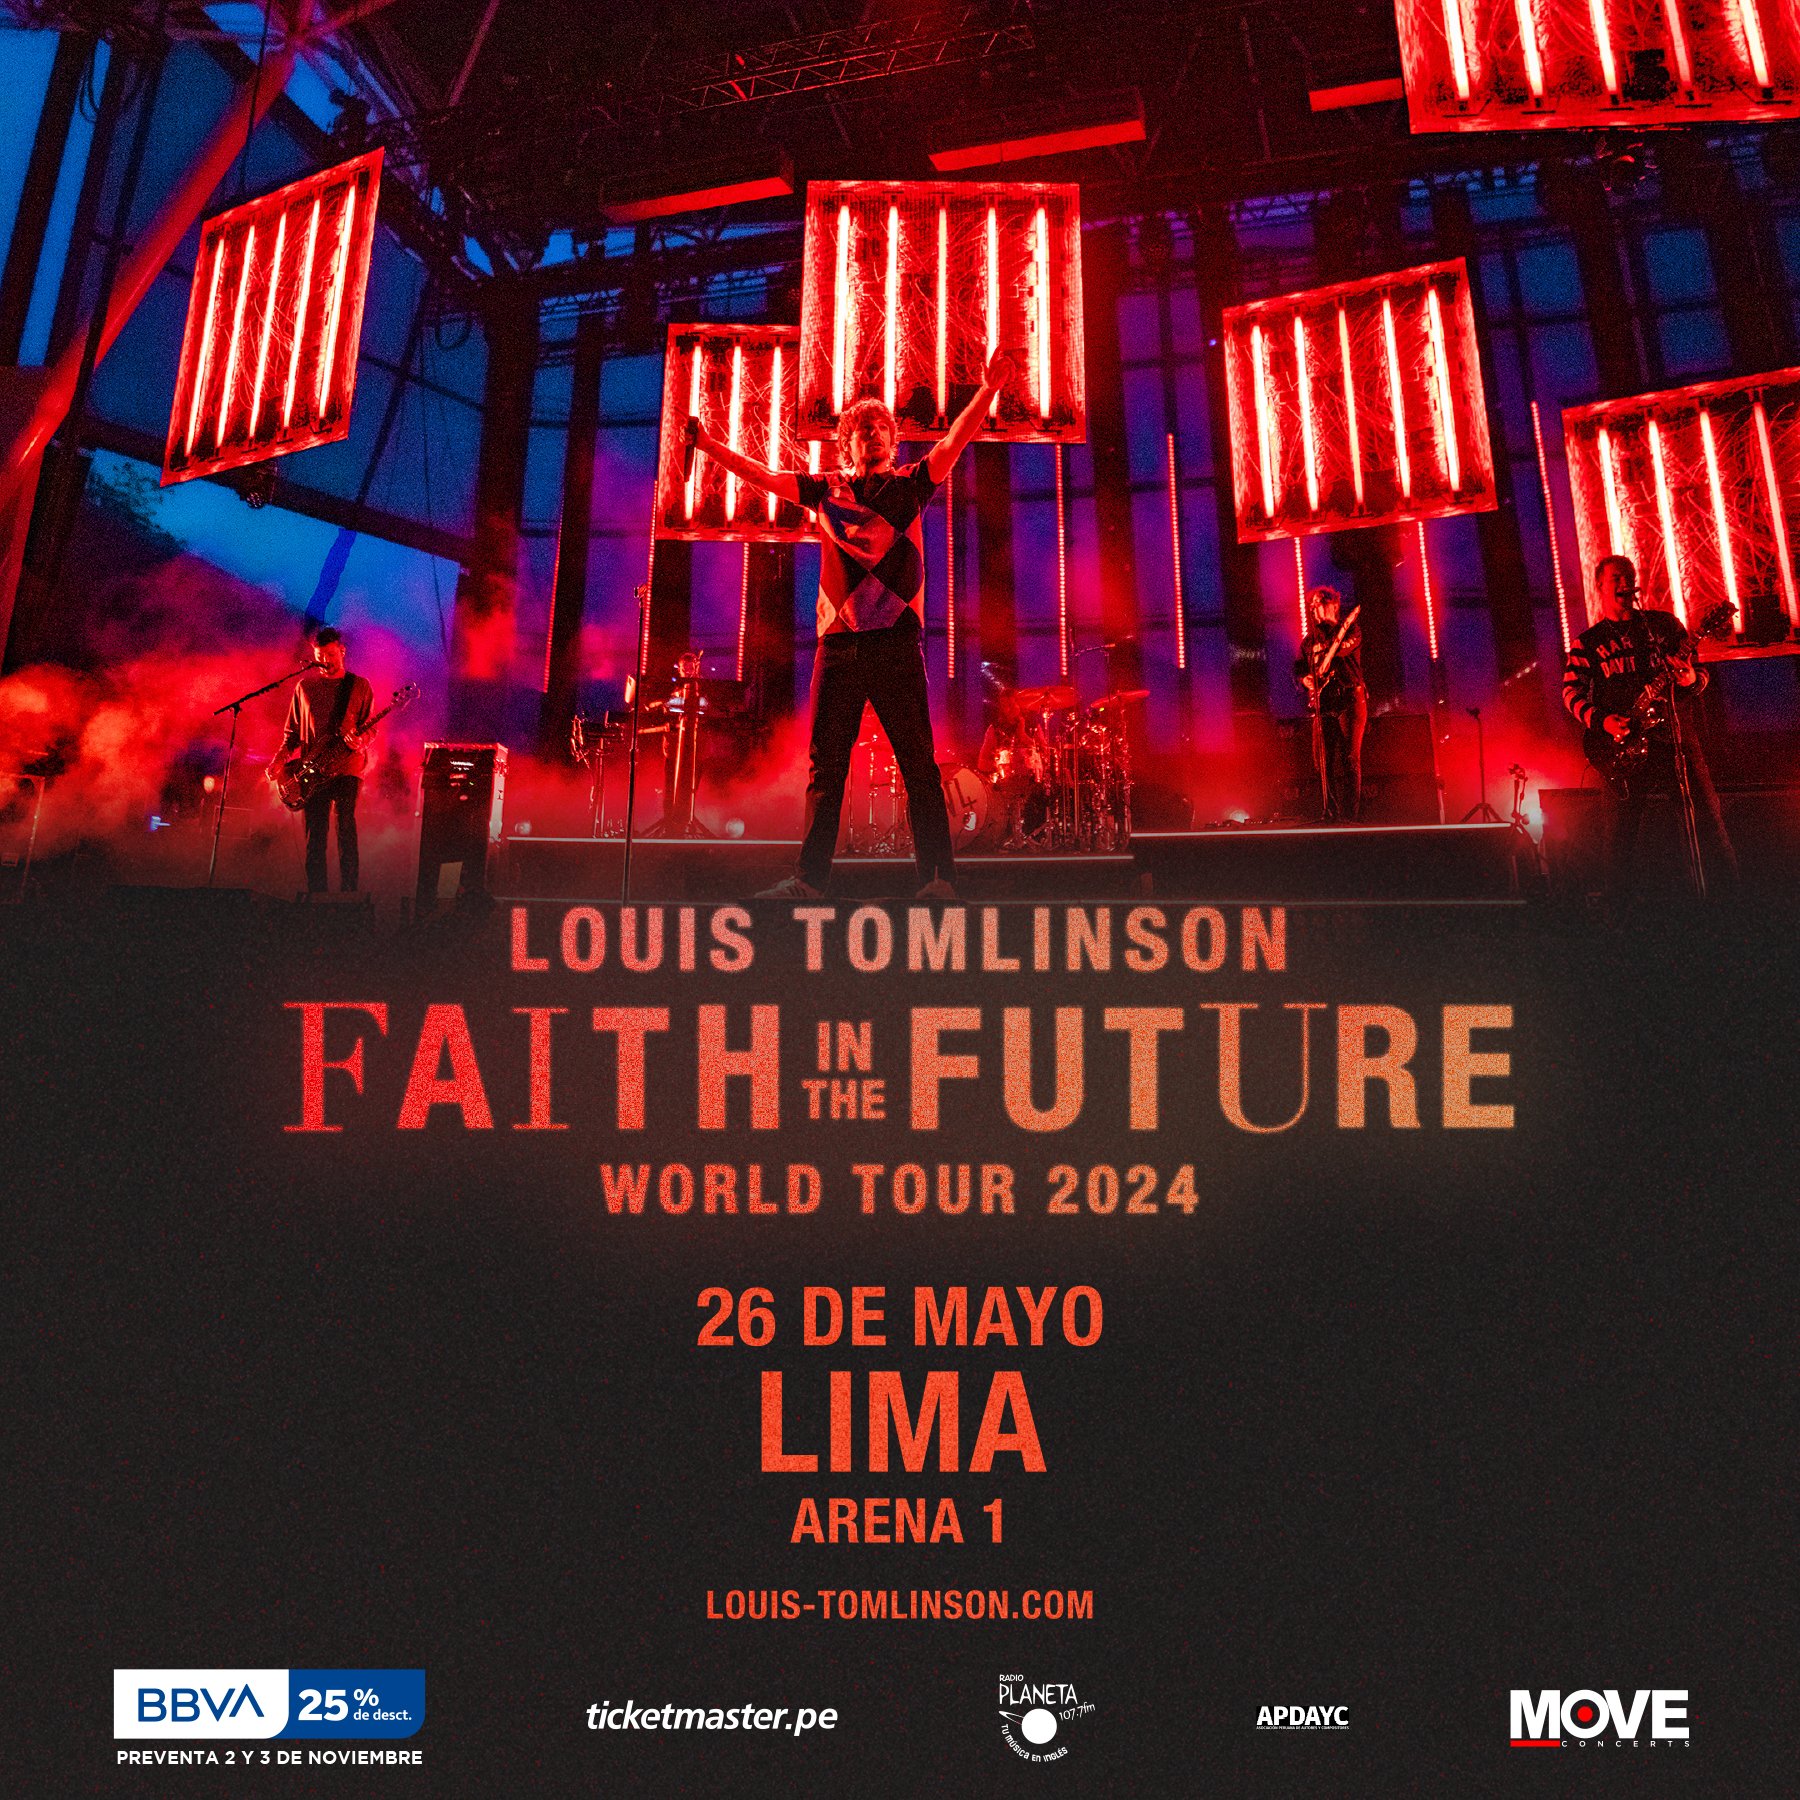 Move Concerts Perú on X: "LOUIS TOMLINSON en Lima Faith in the Future World Tour 26 de Mayo 2024 Arena 1 Entradas a la venta en https://t.co/AM4SeSlLzy desde este 4 de Noviembre